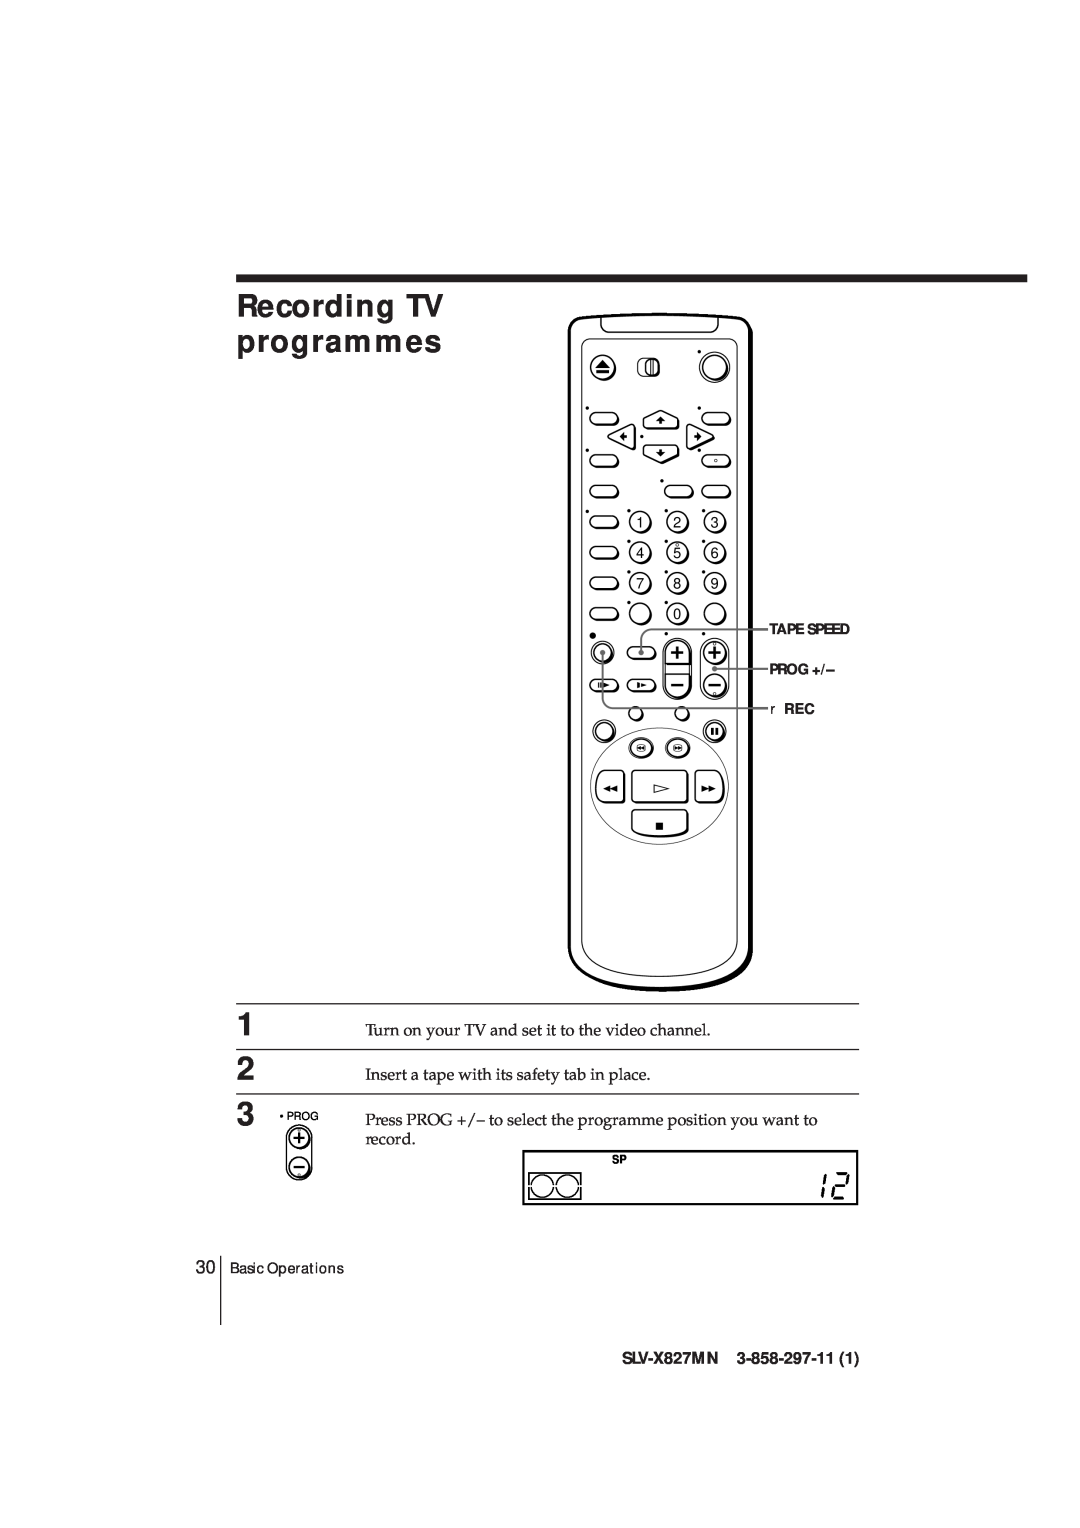 Sony SLV-X827MN manual Recording TV programmes, 1 2 4 5 7 8, TAPE SPEED PROG + r REC, Basic Operations, Prog 